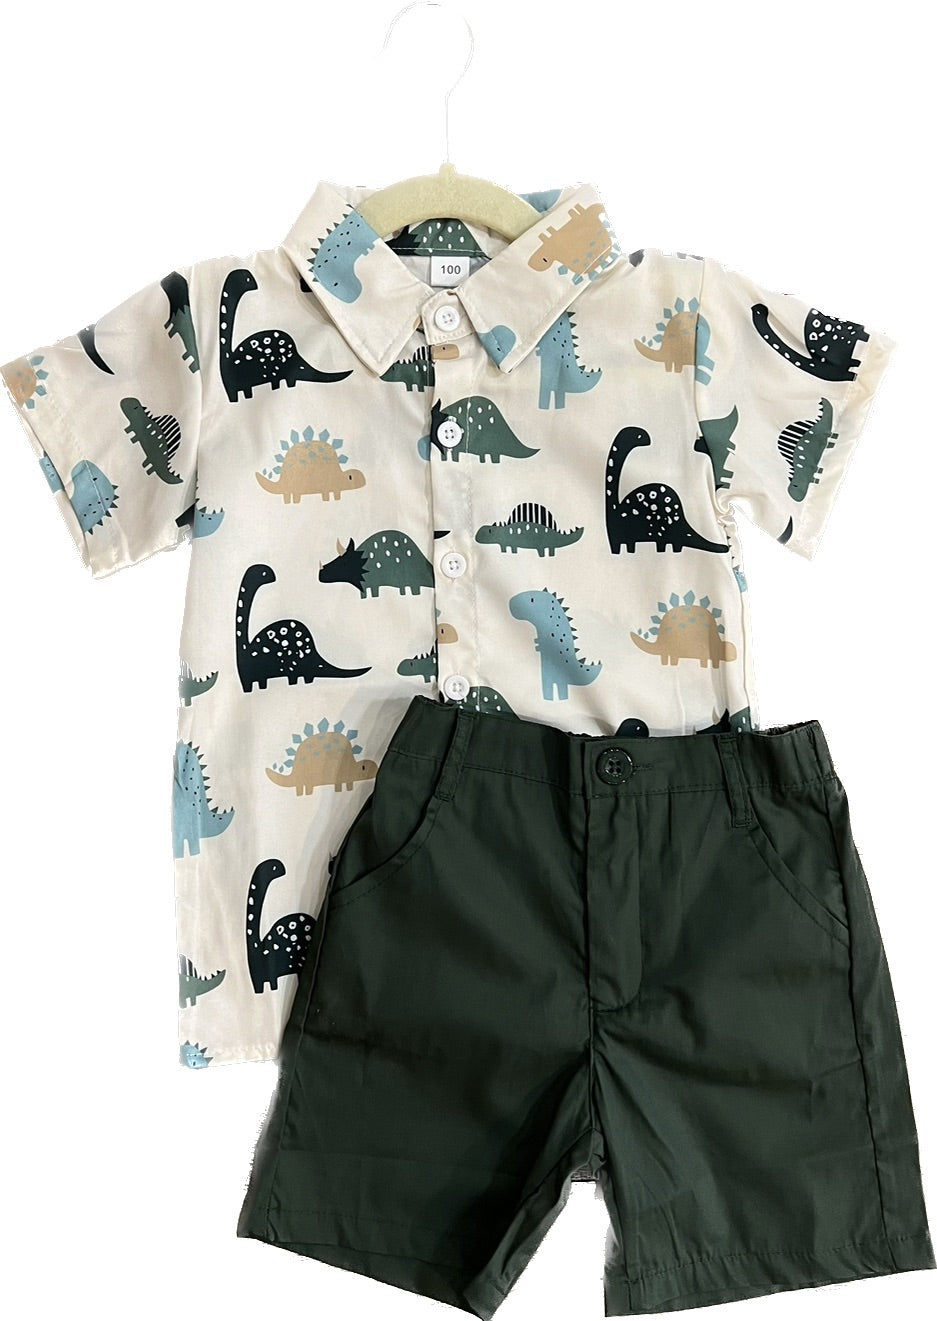 Dino Shirt and Short Set - That's So Darling